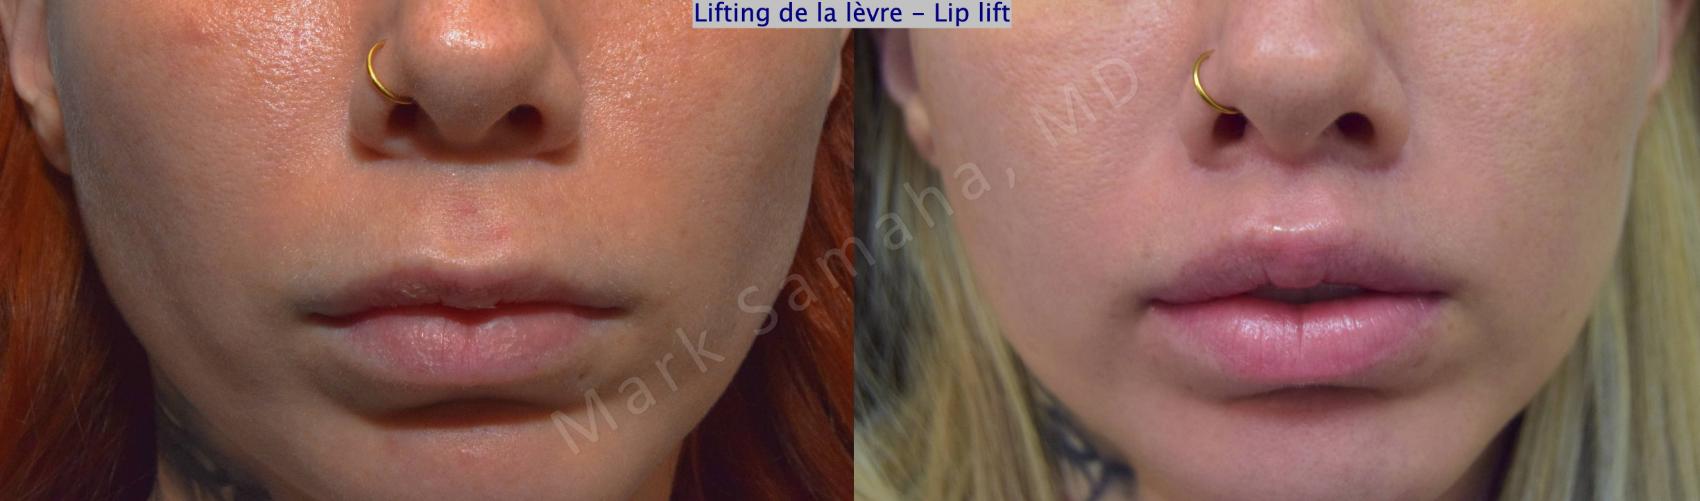 Transformative Advances in Lip Lift Cosmetic Procedures